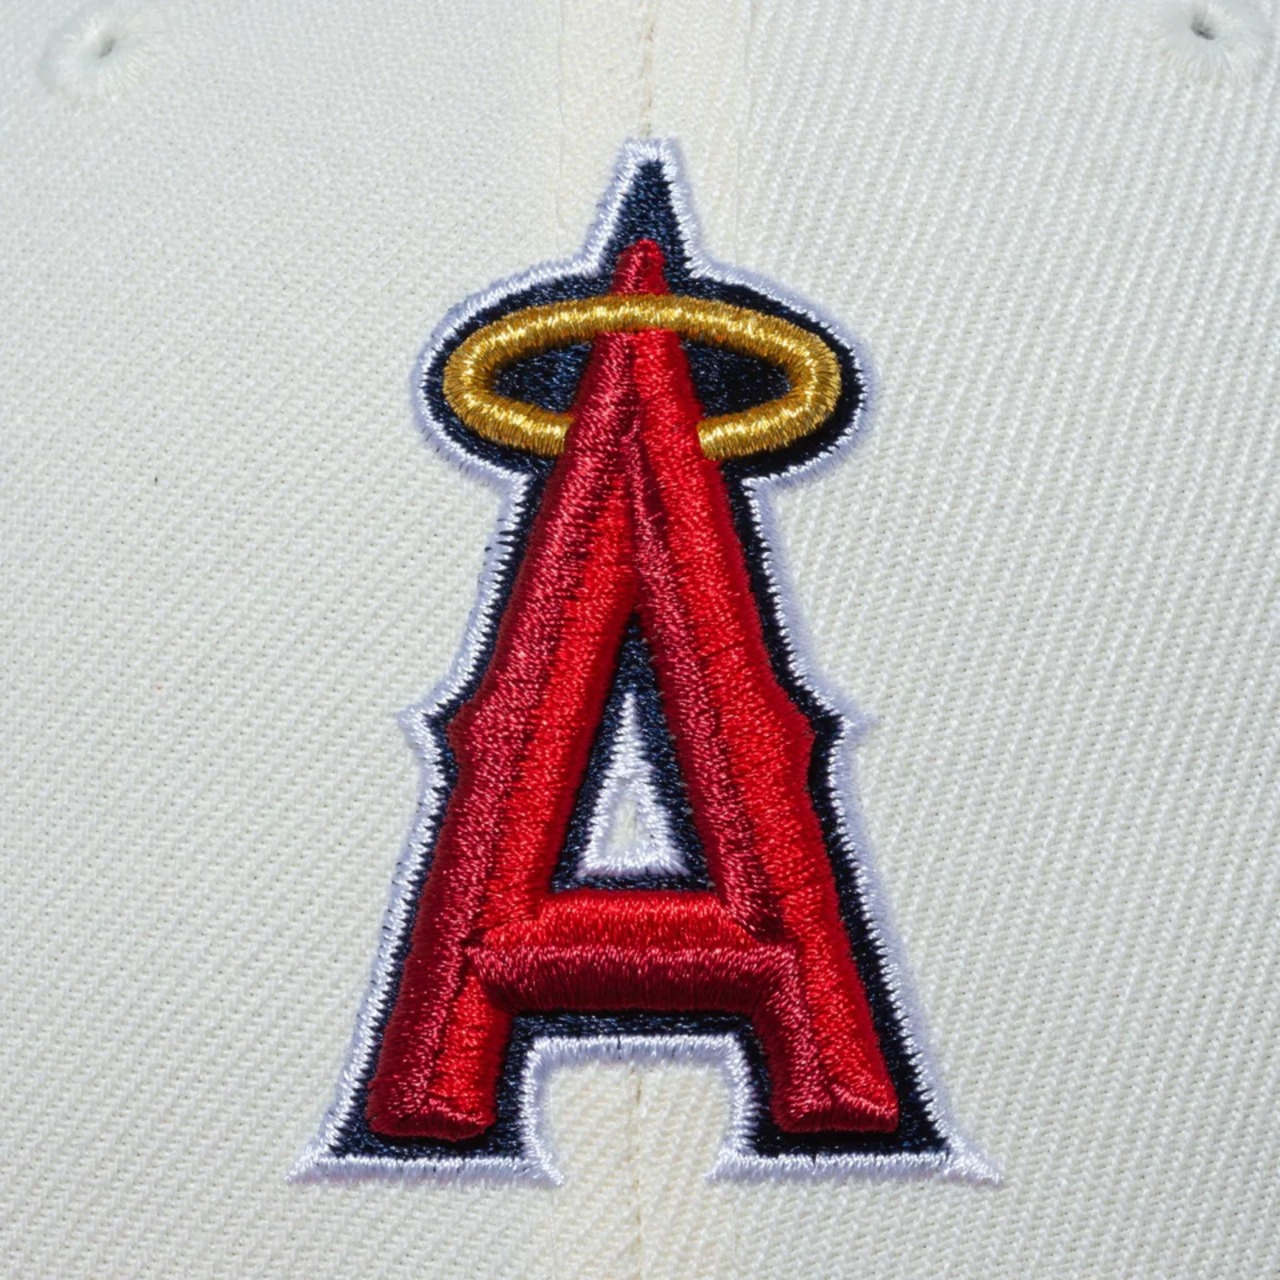 NEW ERA 9FORTY/940 Shohei Ohtani American League MVP & Home Runs Leaders ロサンゼルス・エンゼルス スカーレット / クロームホワイト 国内正規品